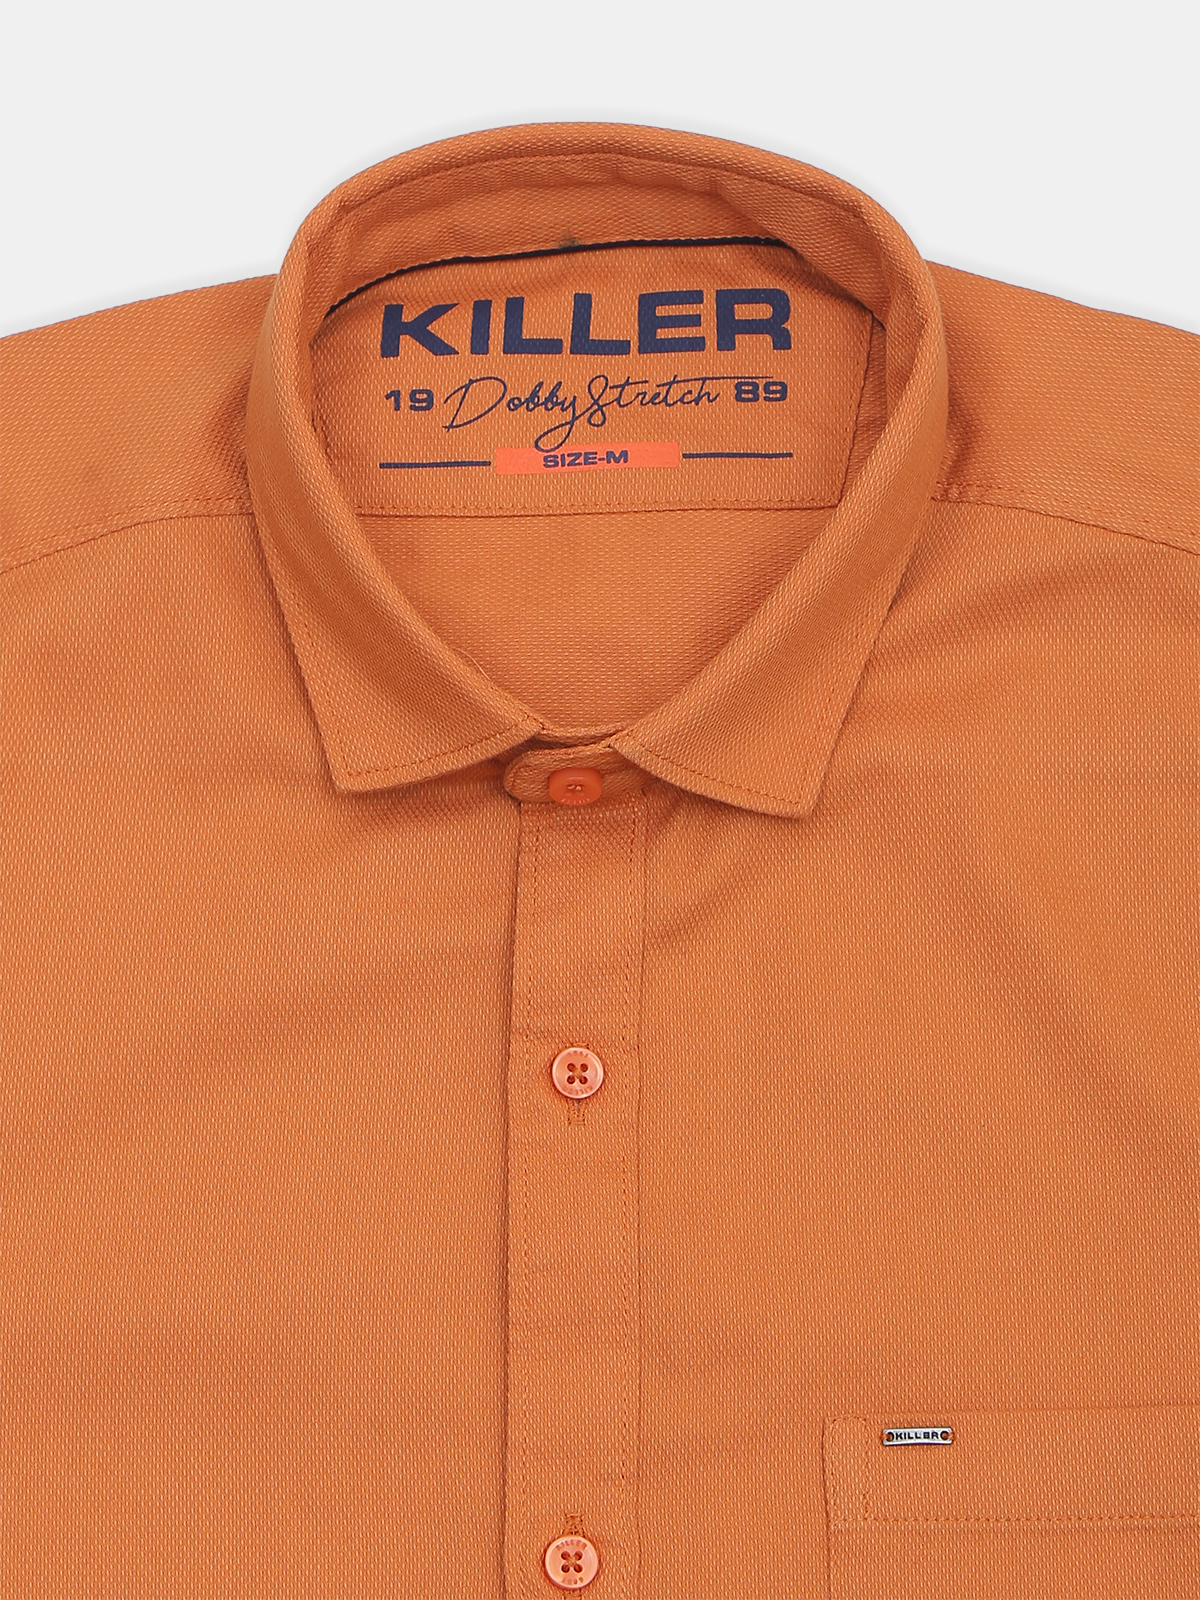 https://1099554485.rsc.cdn77.org/upload/products/_killer_solid_rust_orange_cotton_casual_wear_slim_fit_shirt_16422197961909877_2.jpg